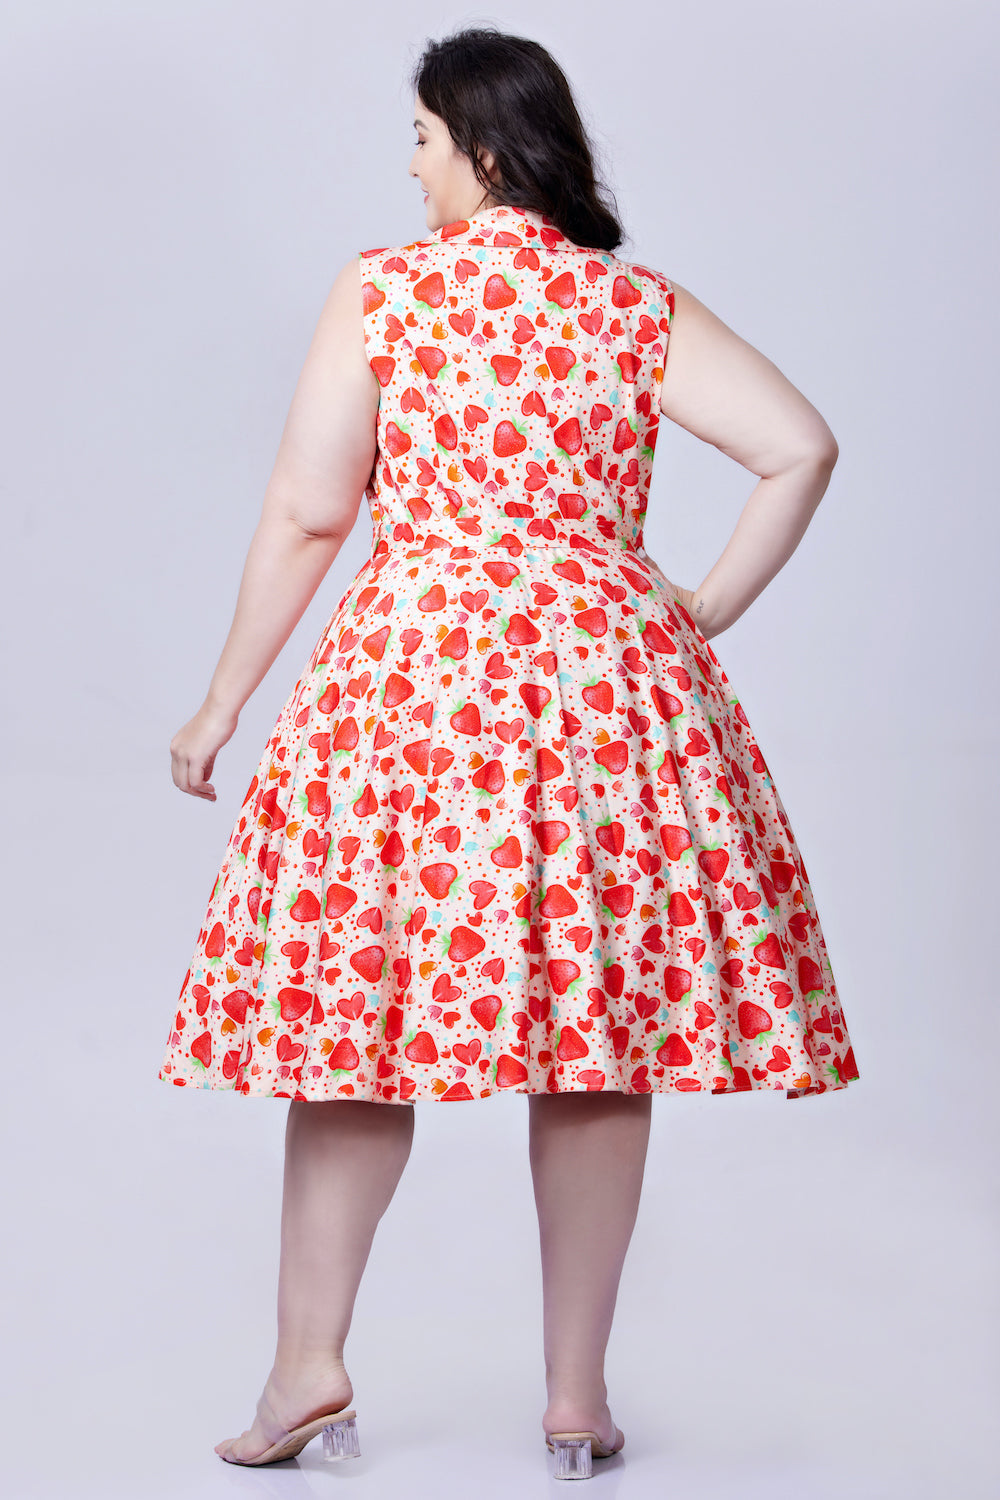 Strawberry Hearts Dress